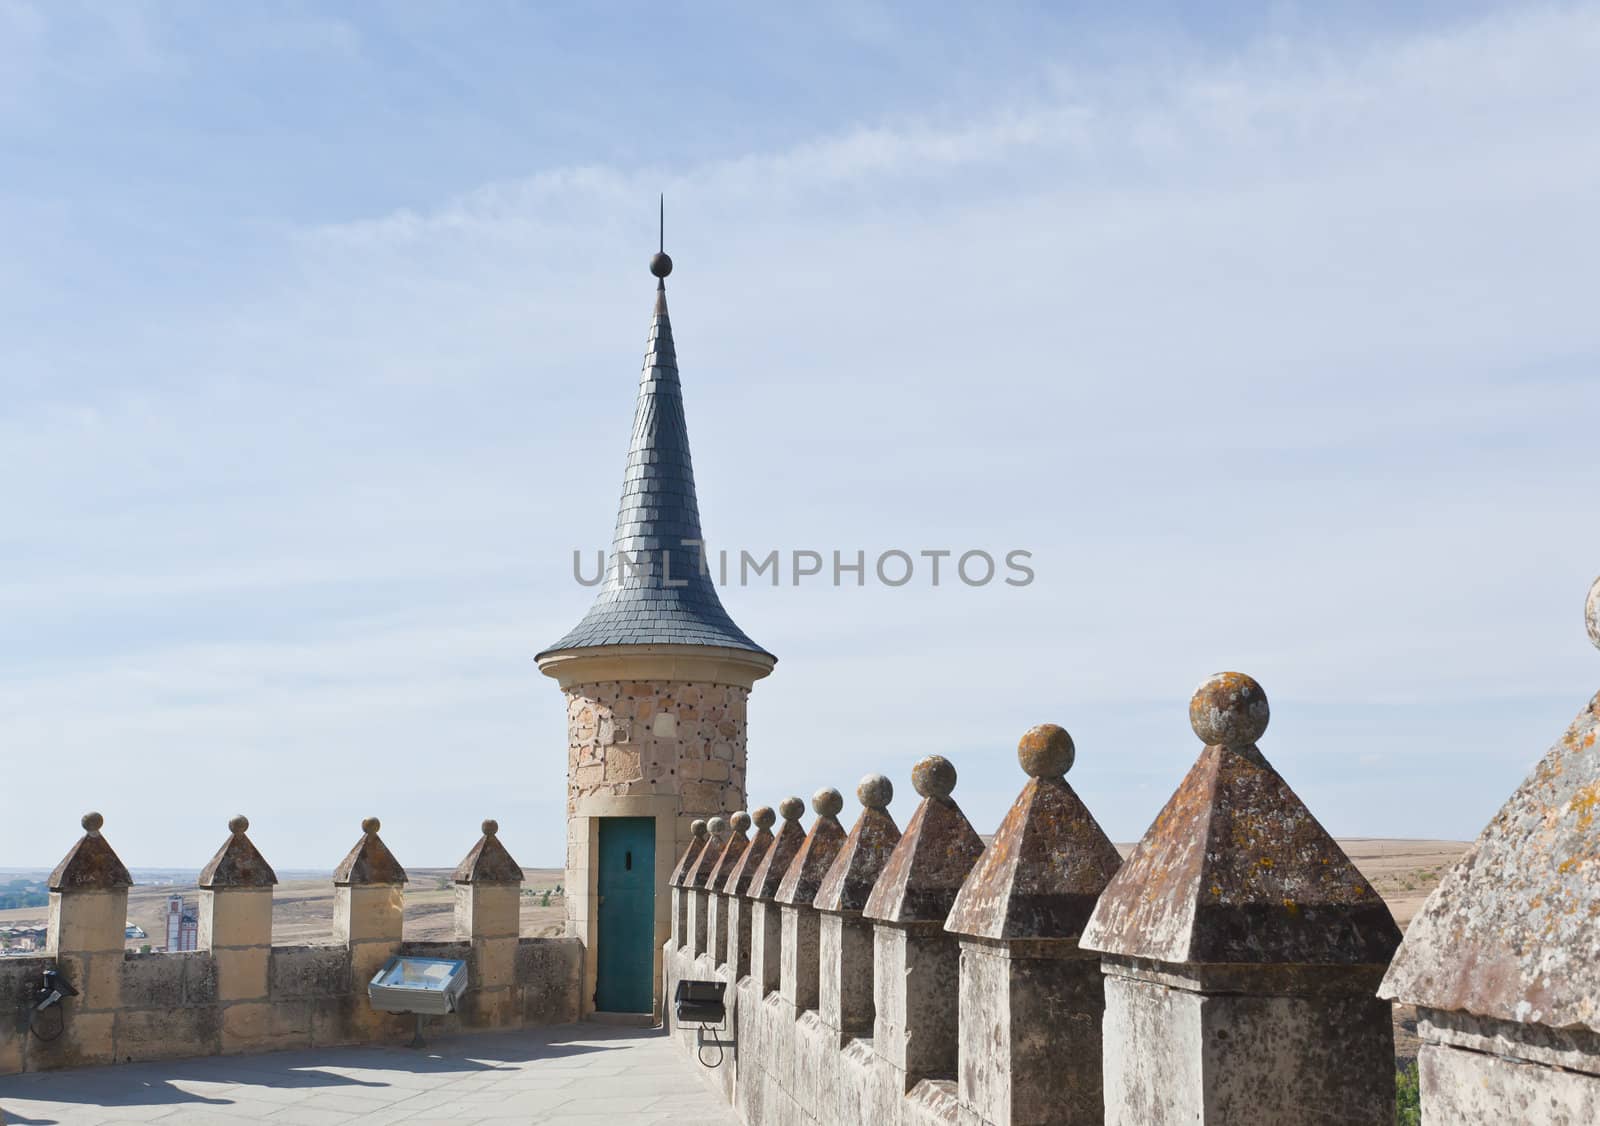 Alcazar fortress of the Segovia city by gary718